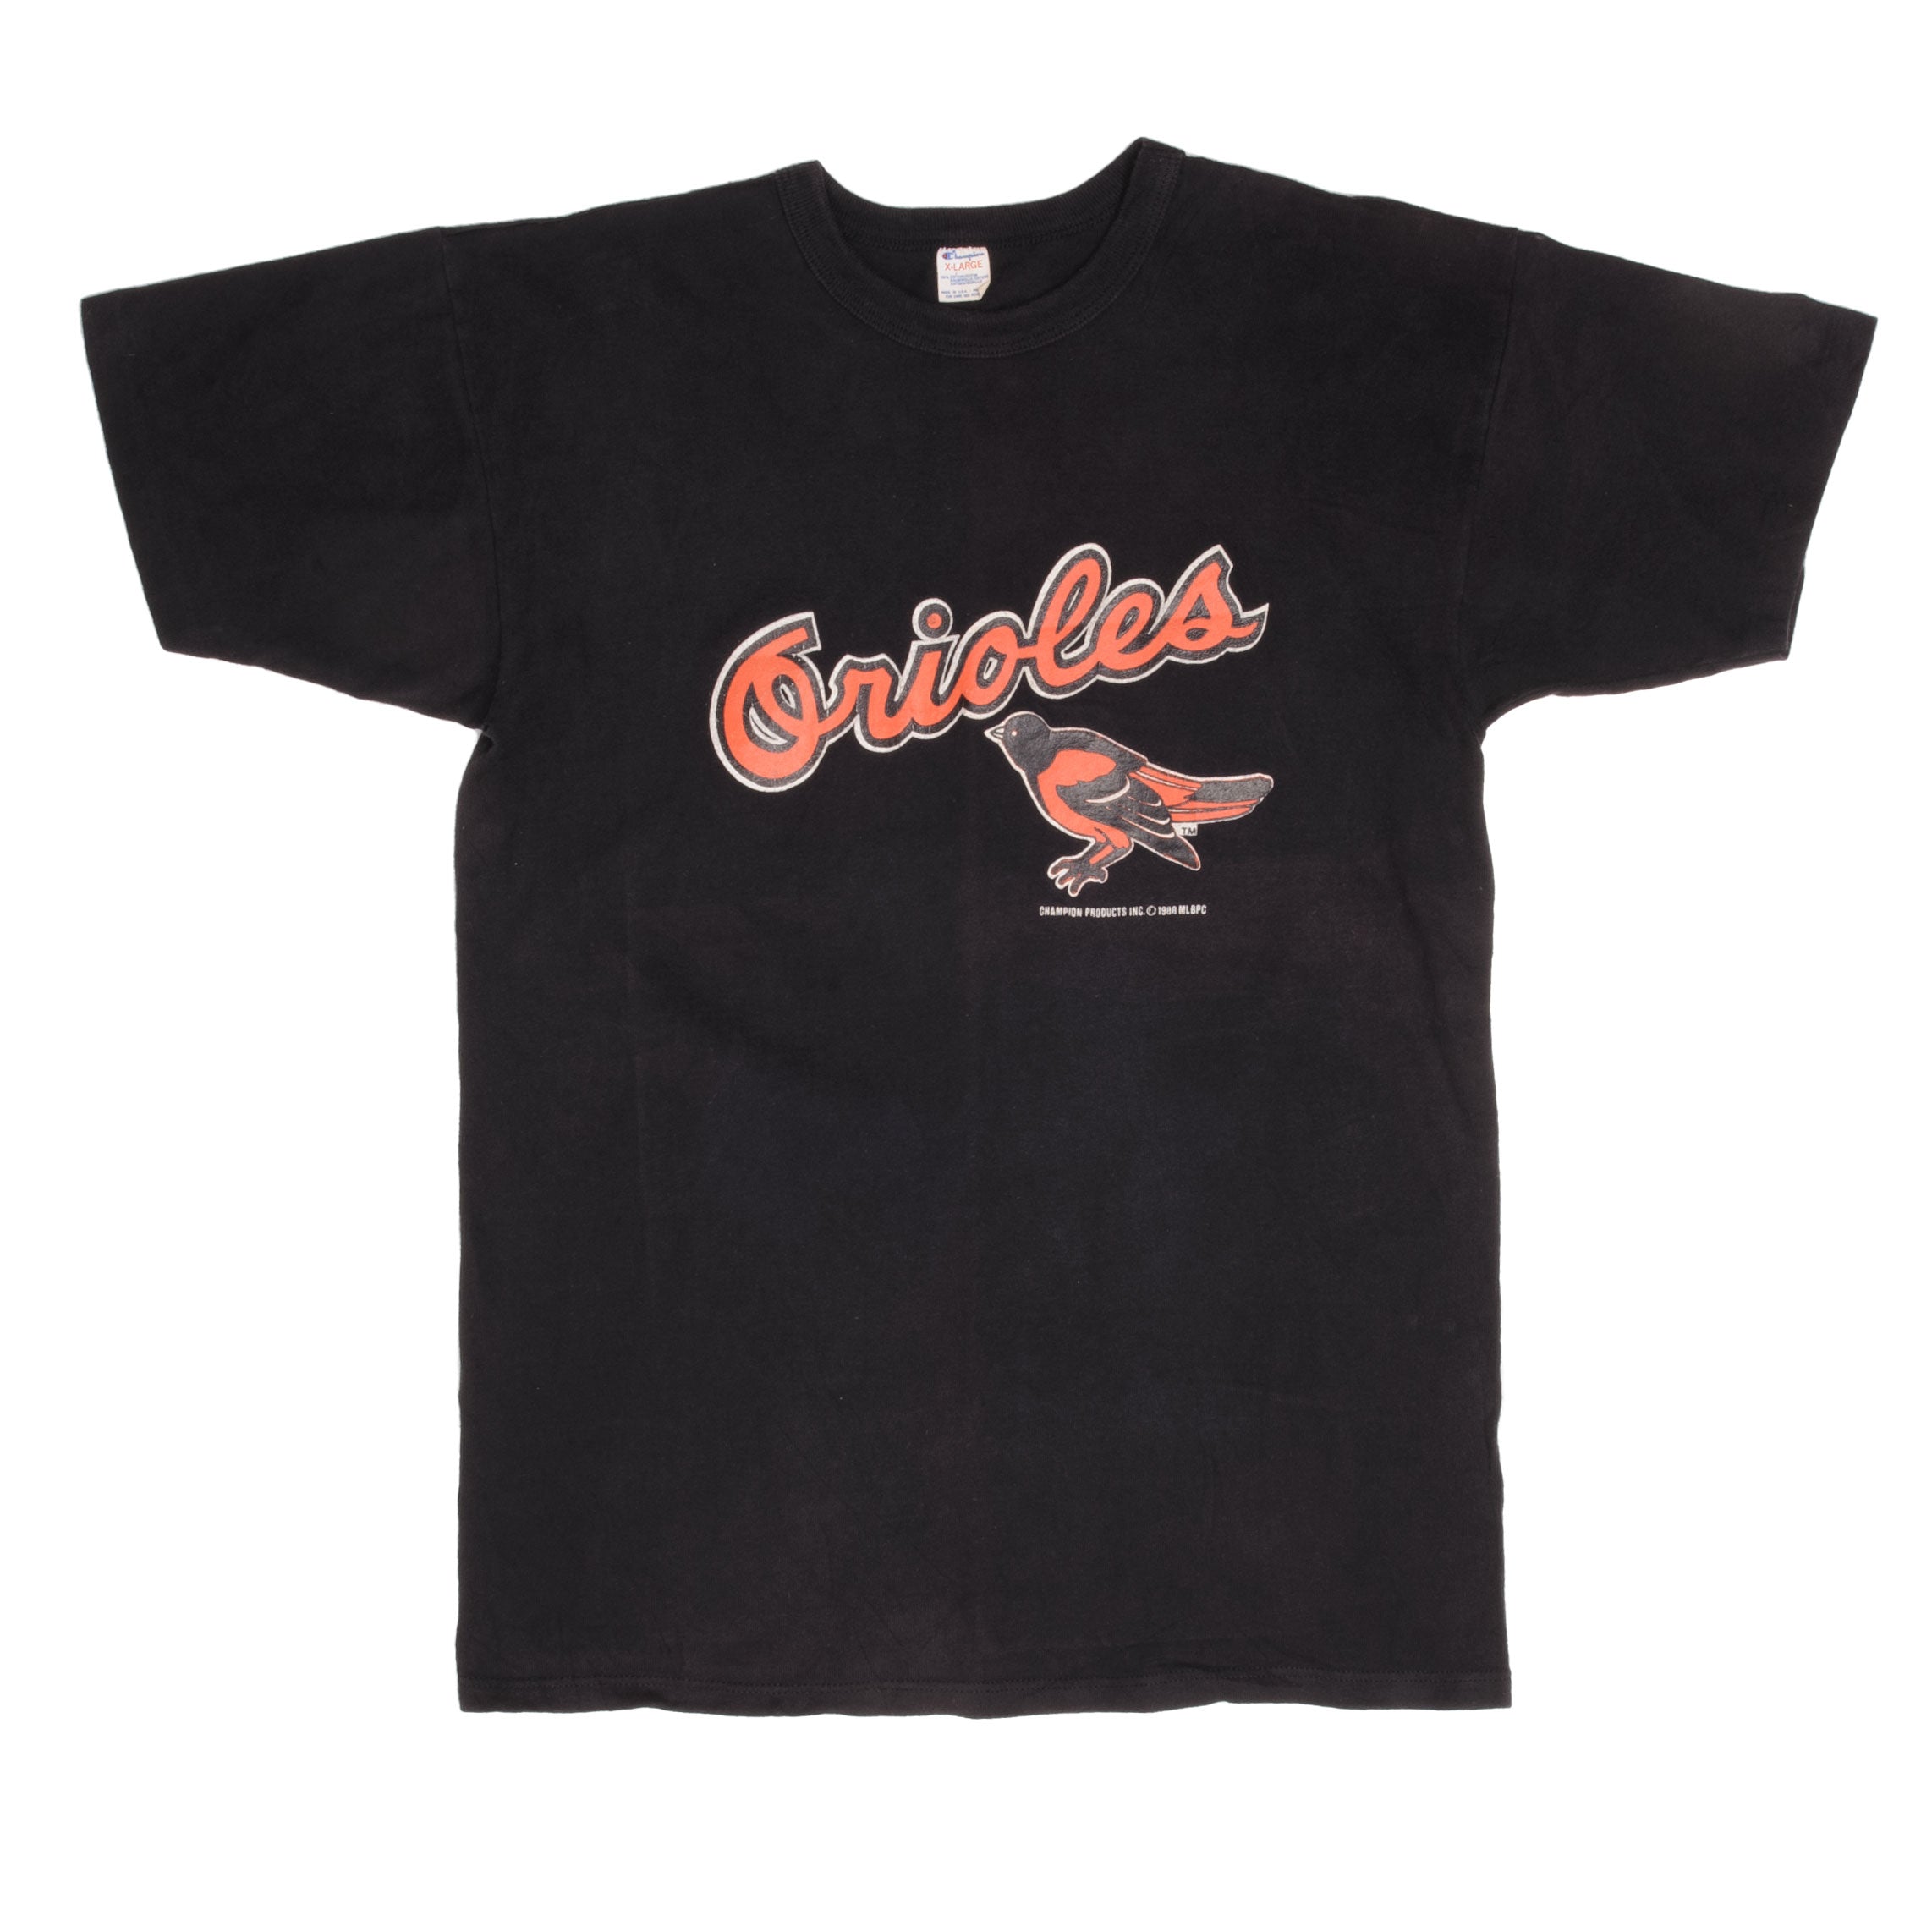 Vintage Champion MLB Baltimore Orioles Tee Shirt 1988 Large Made USA